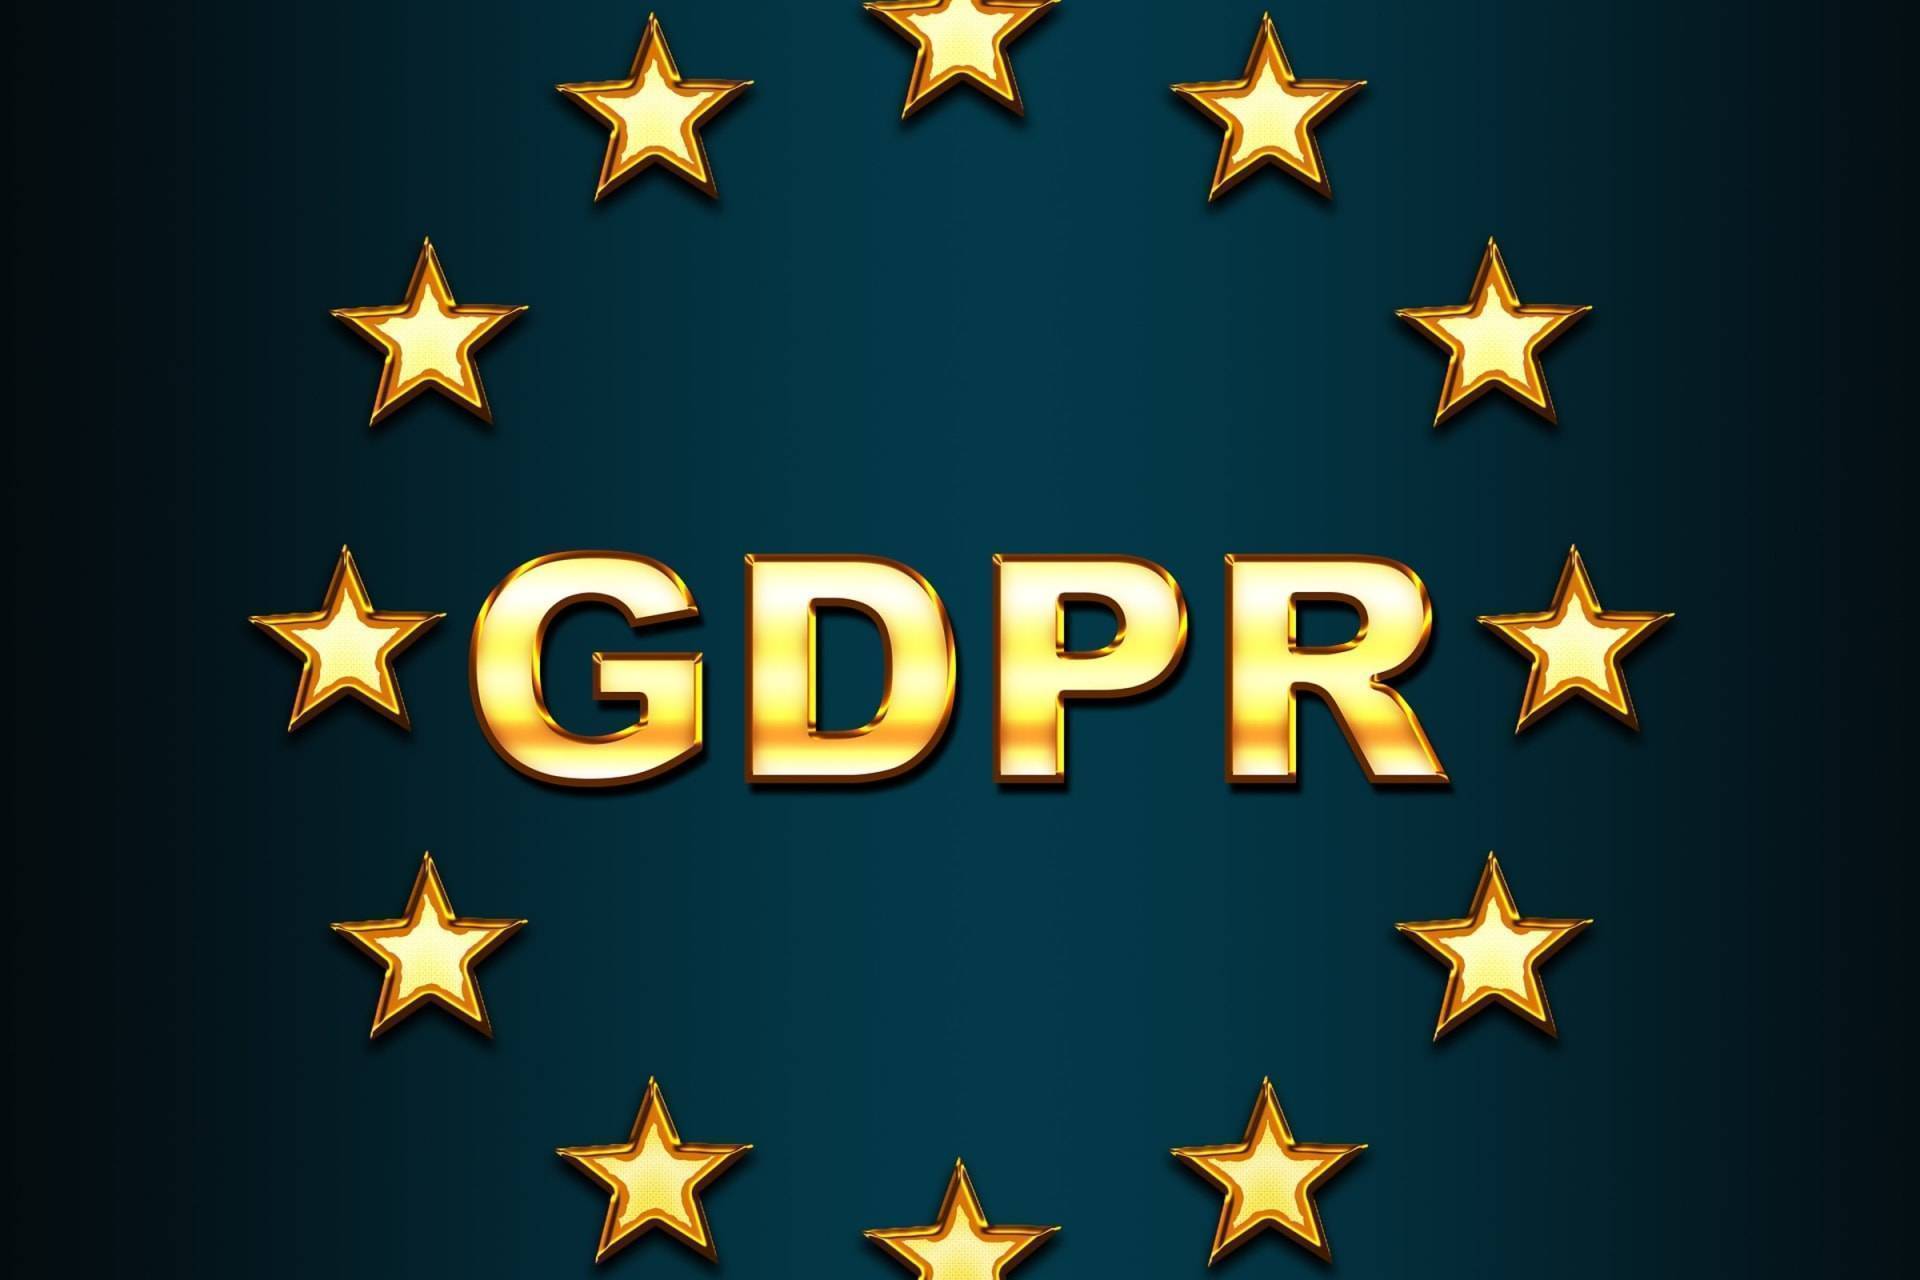 Gdpr - general data protection regulation